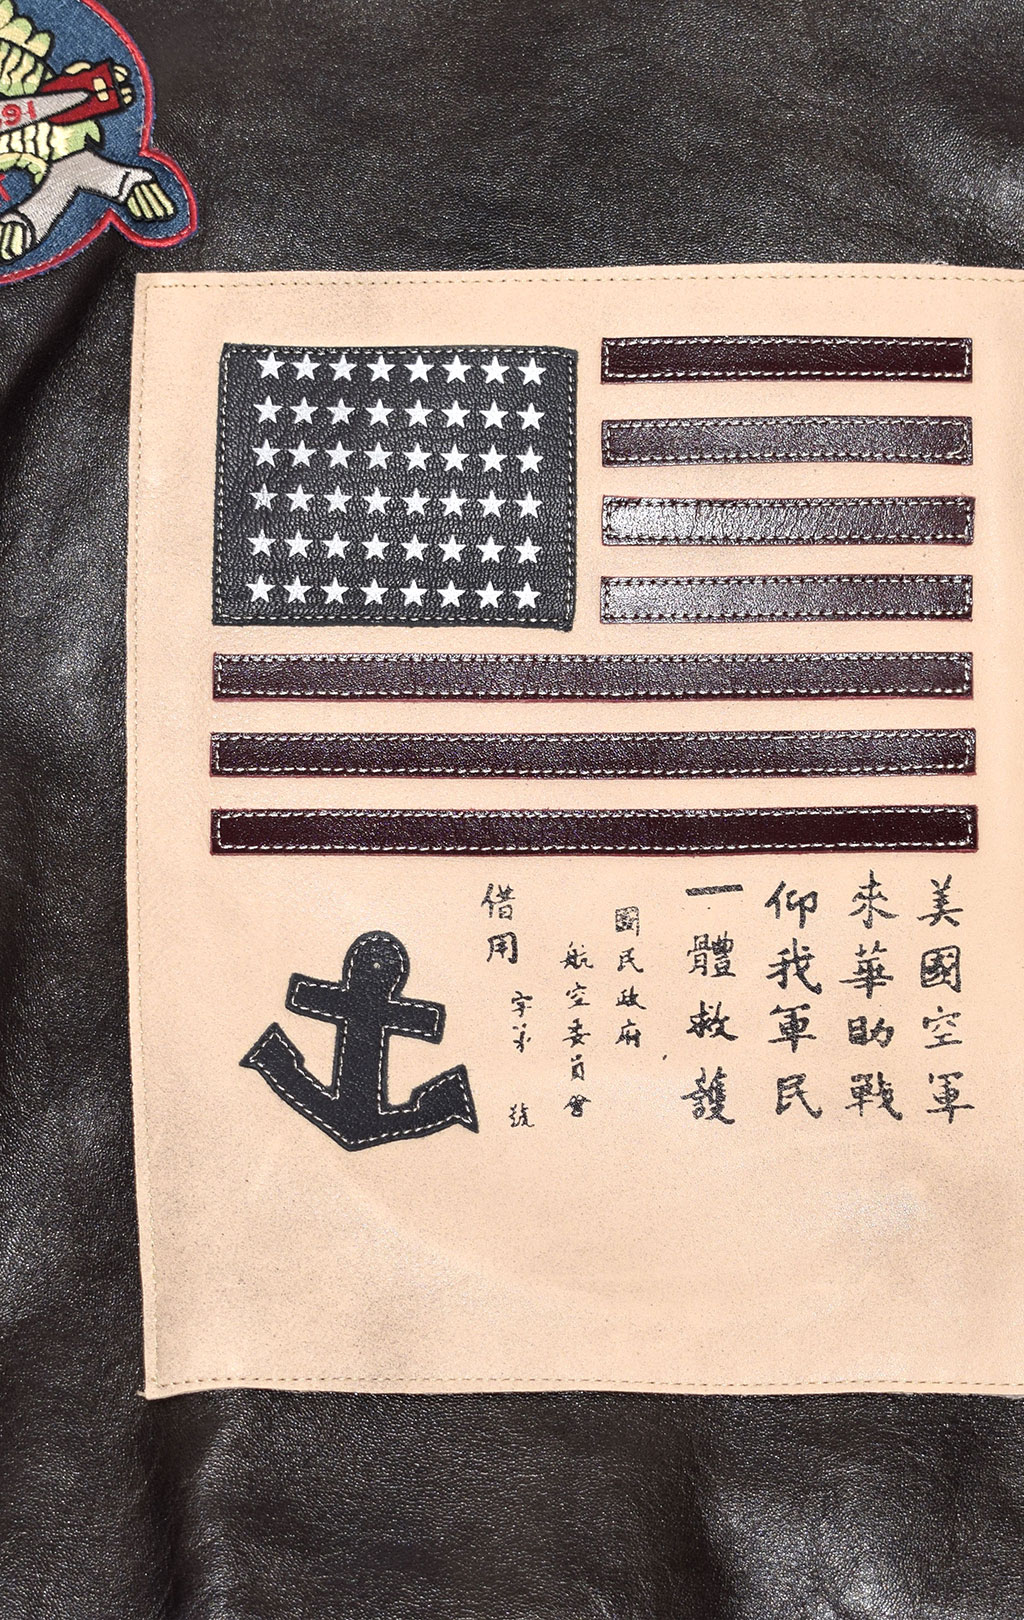 Куртка летная COCKPIT Top Gun Navy big size G-1 кожа brown (Z201036) 